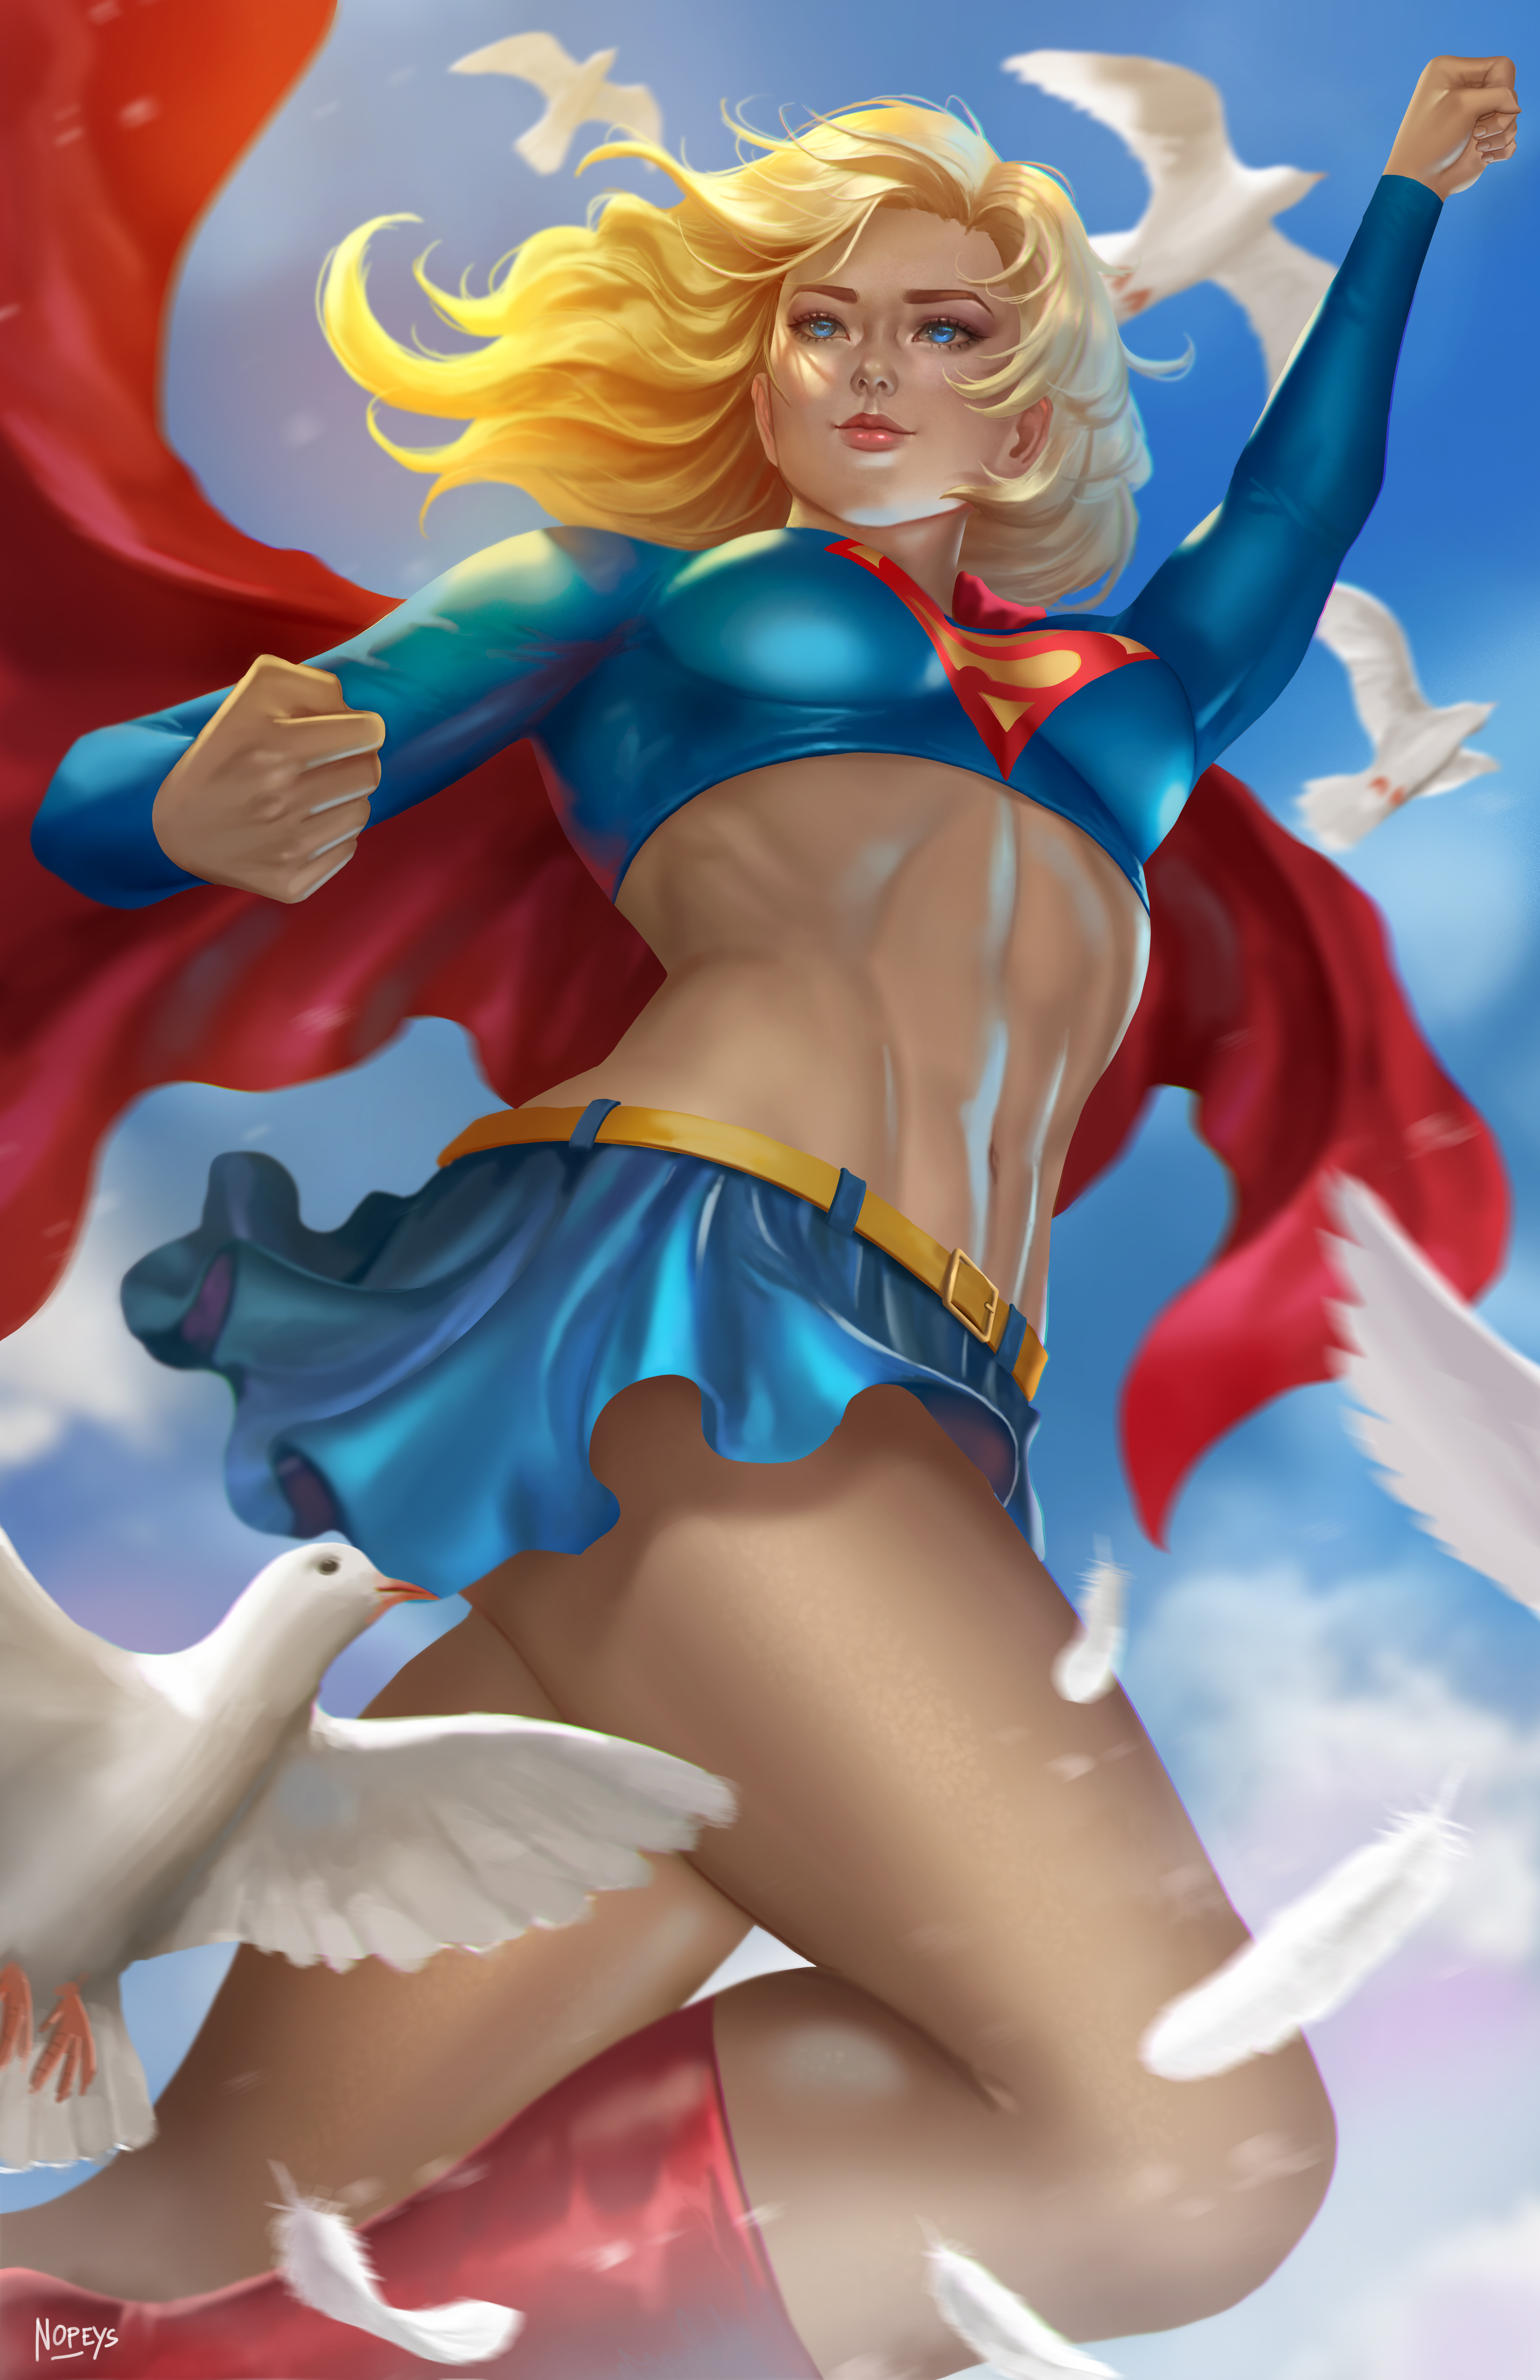 General 3300x5100 Supergirl DC Comics superheroines blonde blue eyes costumes blue tops miniskirt cape sky 2D artwork drawing fan art Nopeys digital art portrait display watermarked